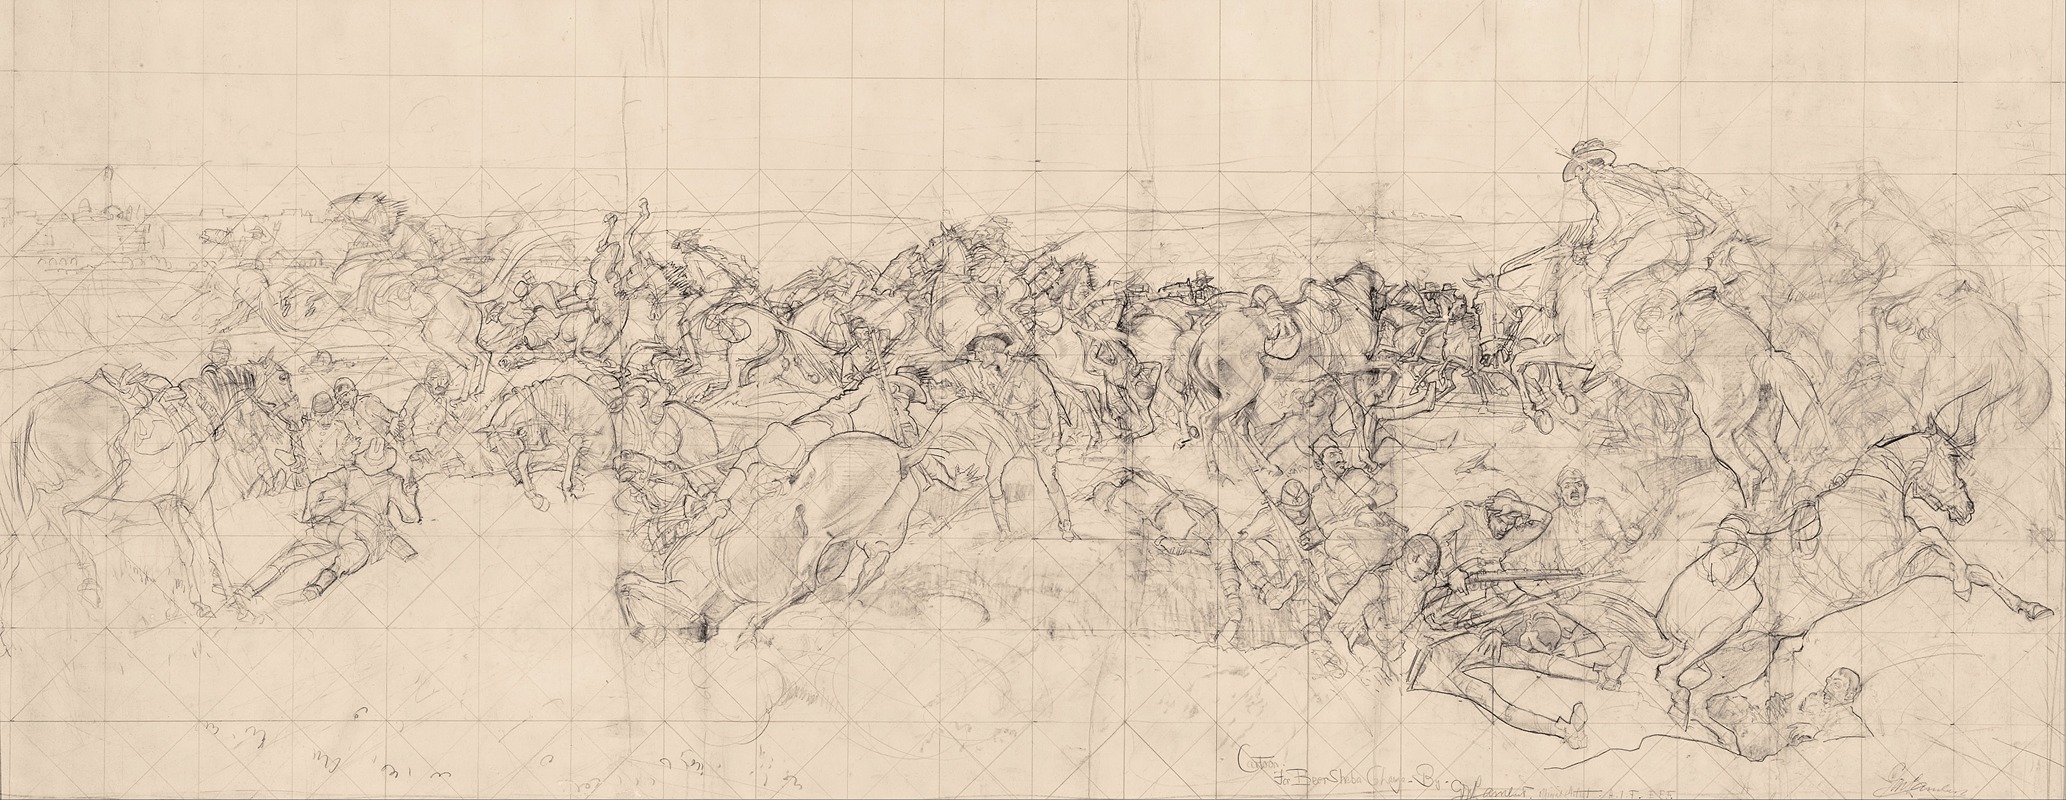 George Washington Lambert - The charge of the 4th Light Horse Brigade at Beersheba